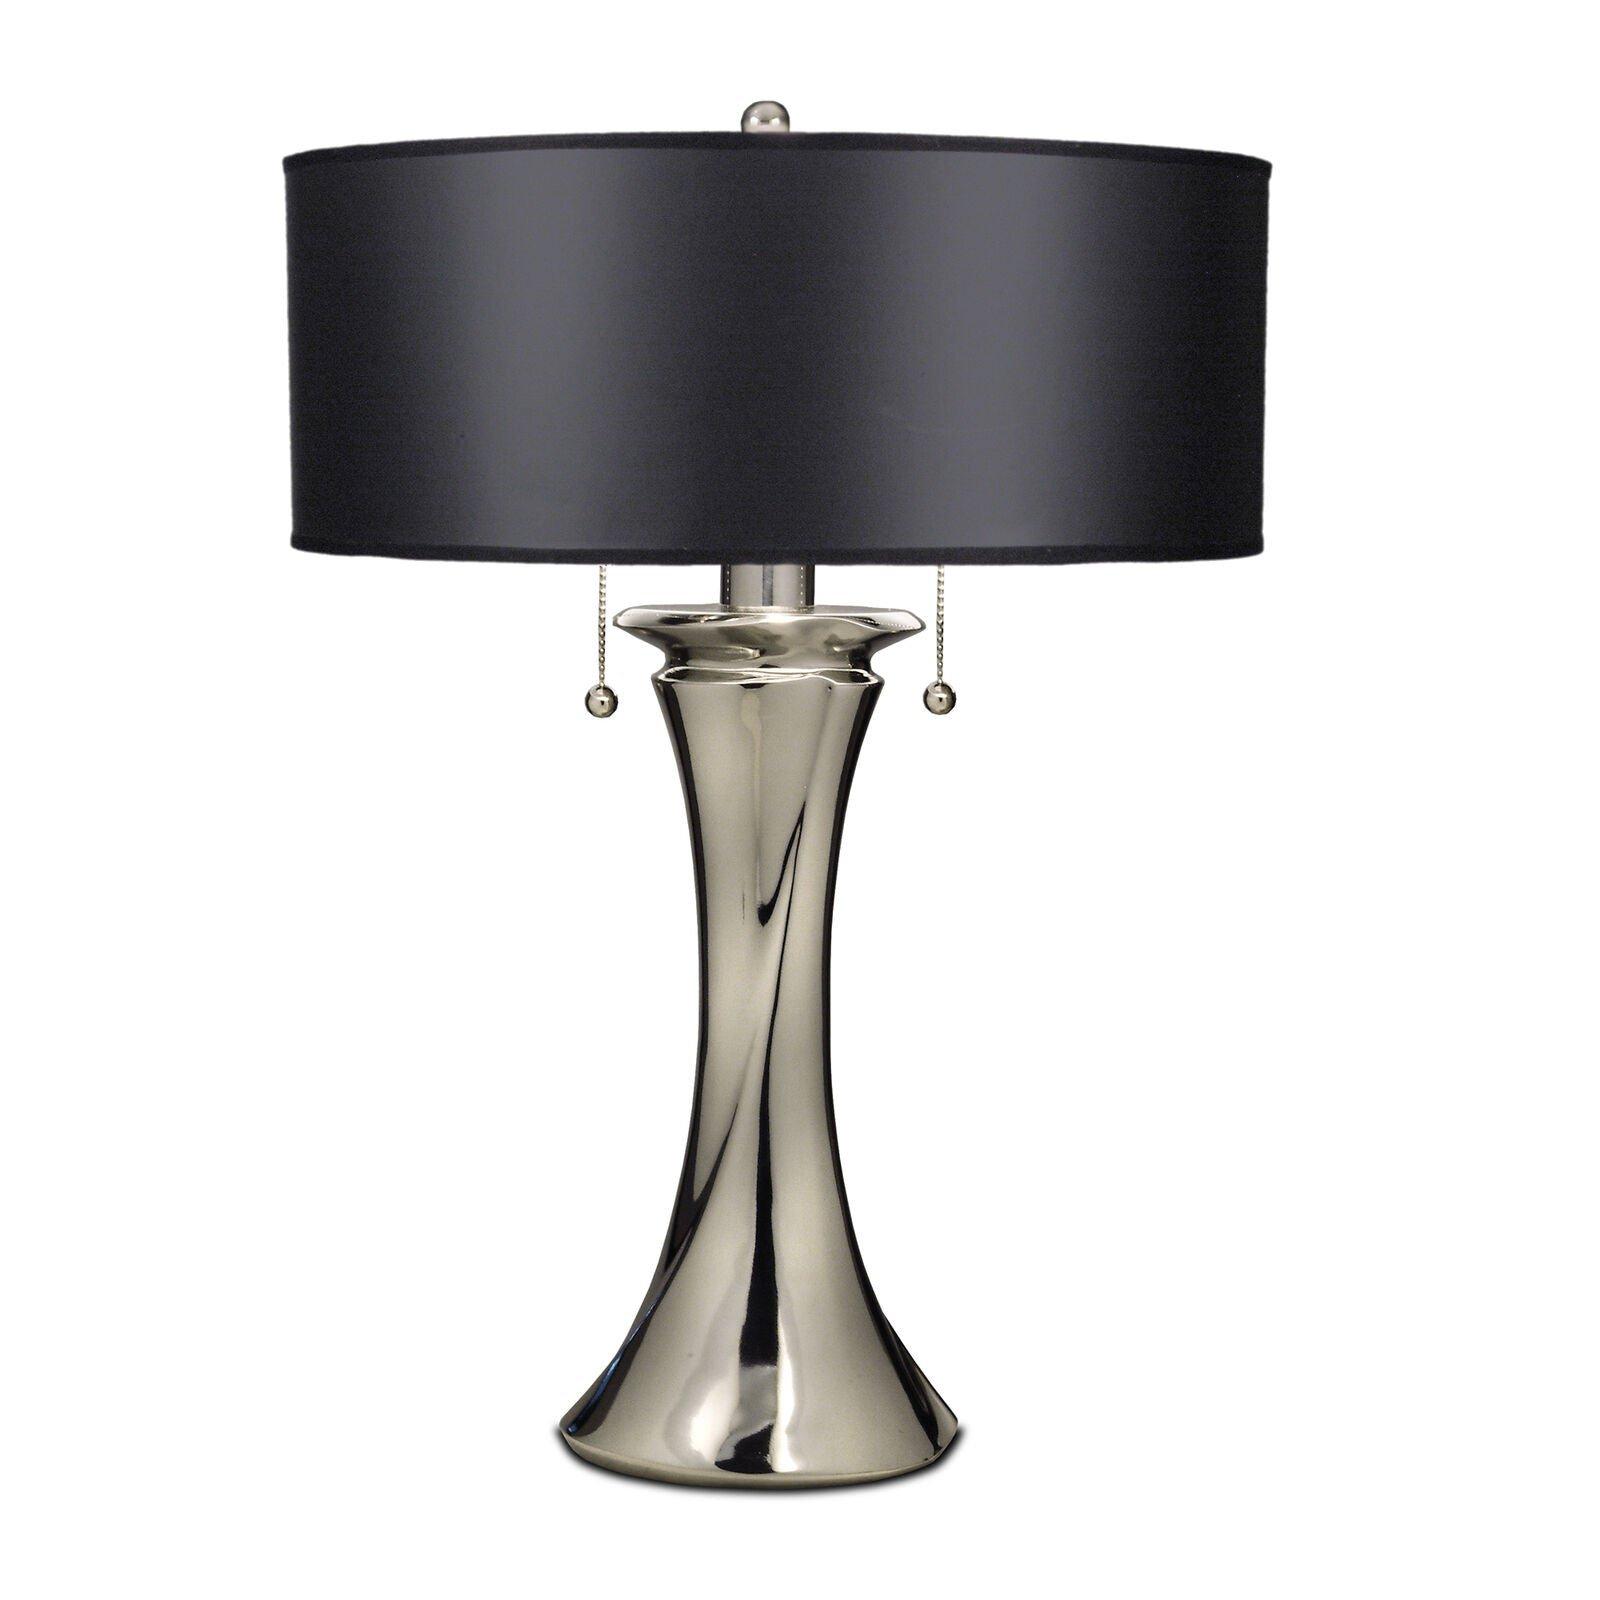 2 Bulb Twin Table Lamp Highly Polished Nickel Finish LED E27 60W Bulb